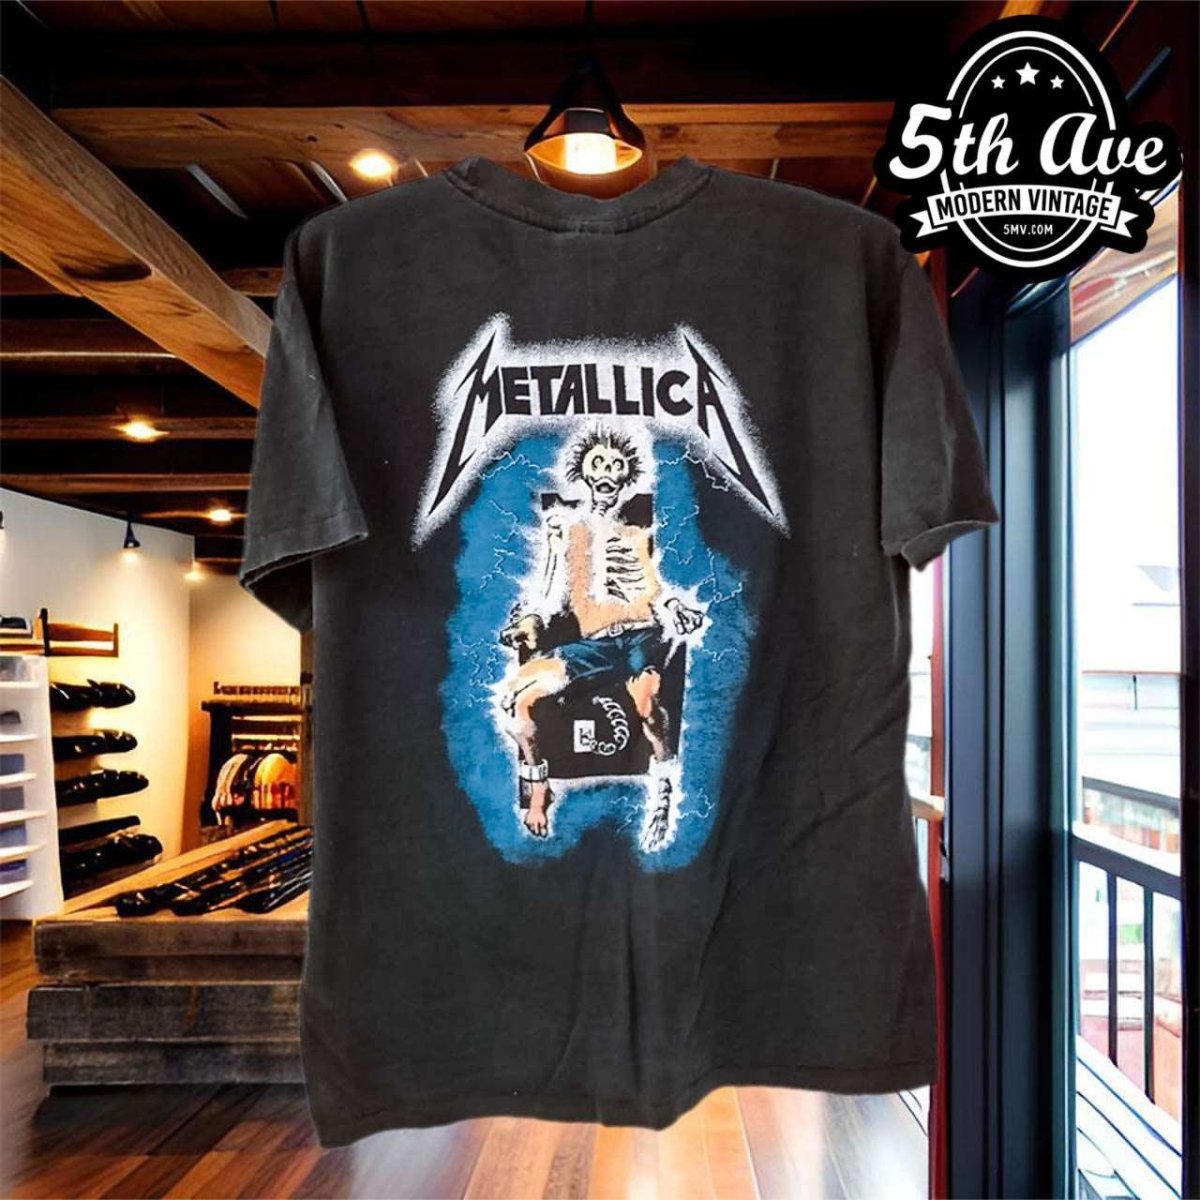 Electrifying Metallica: Ride the Lightning t shirt - Vintage Band Shirts